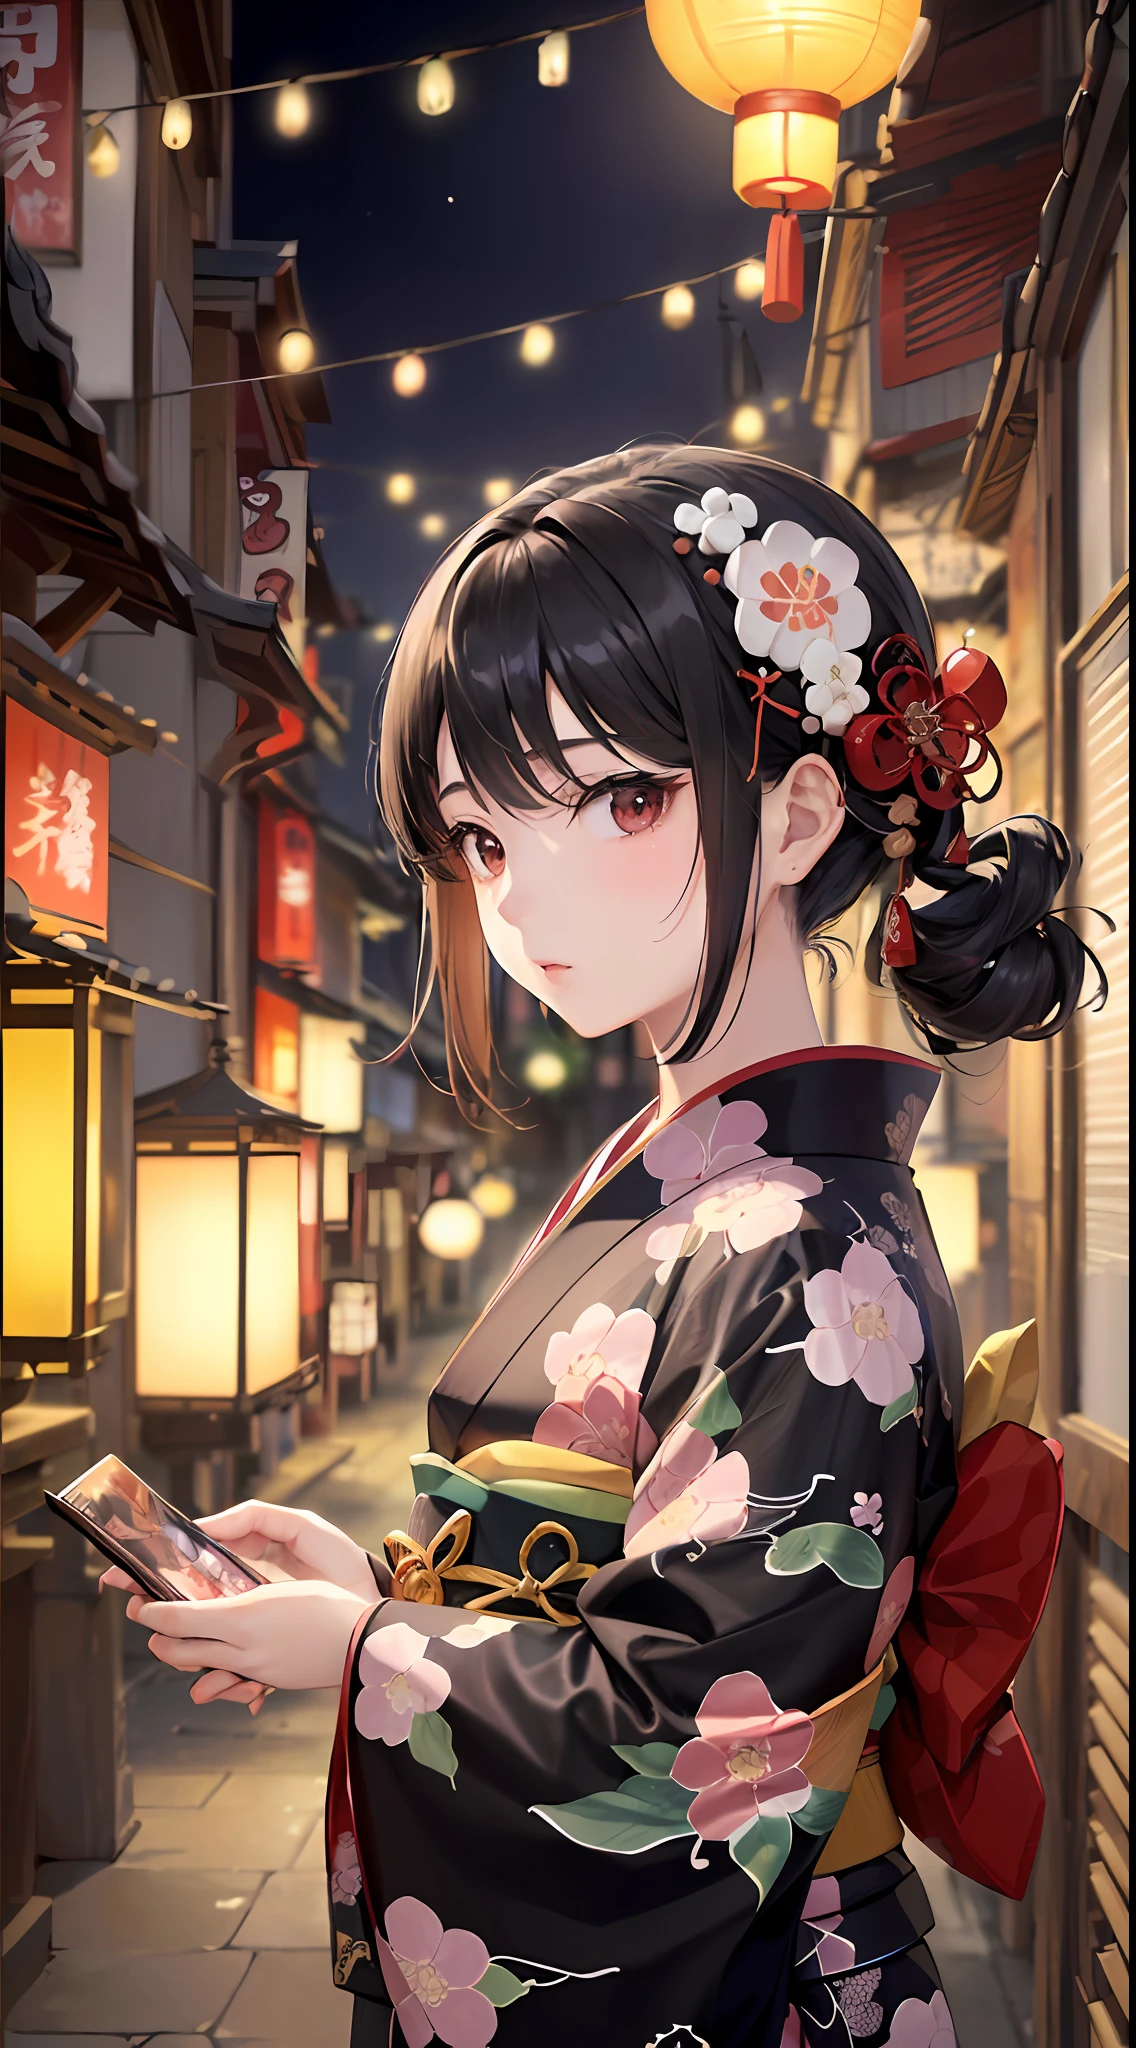 「(8k wallpaper:1.5)、(high-level image quality:1.3)、(ukiyoe painting:1.2)、(Townscape Plum Lanterns Lanterns Alleys Japanese Style:1.1)、(Girl Anime Black Hair Decorative Hair Kimono:1.3)」